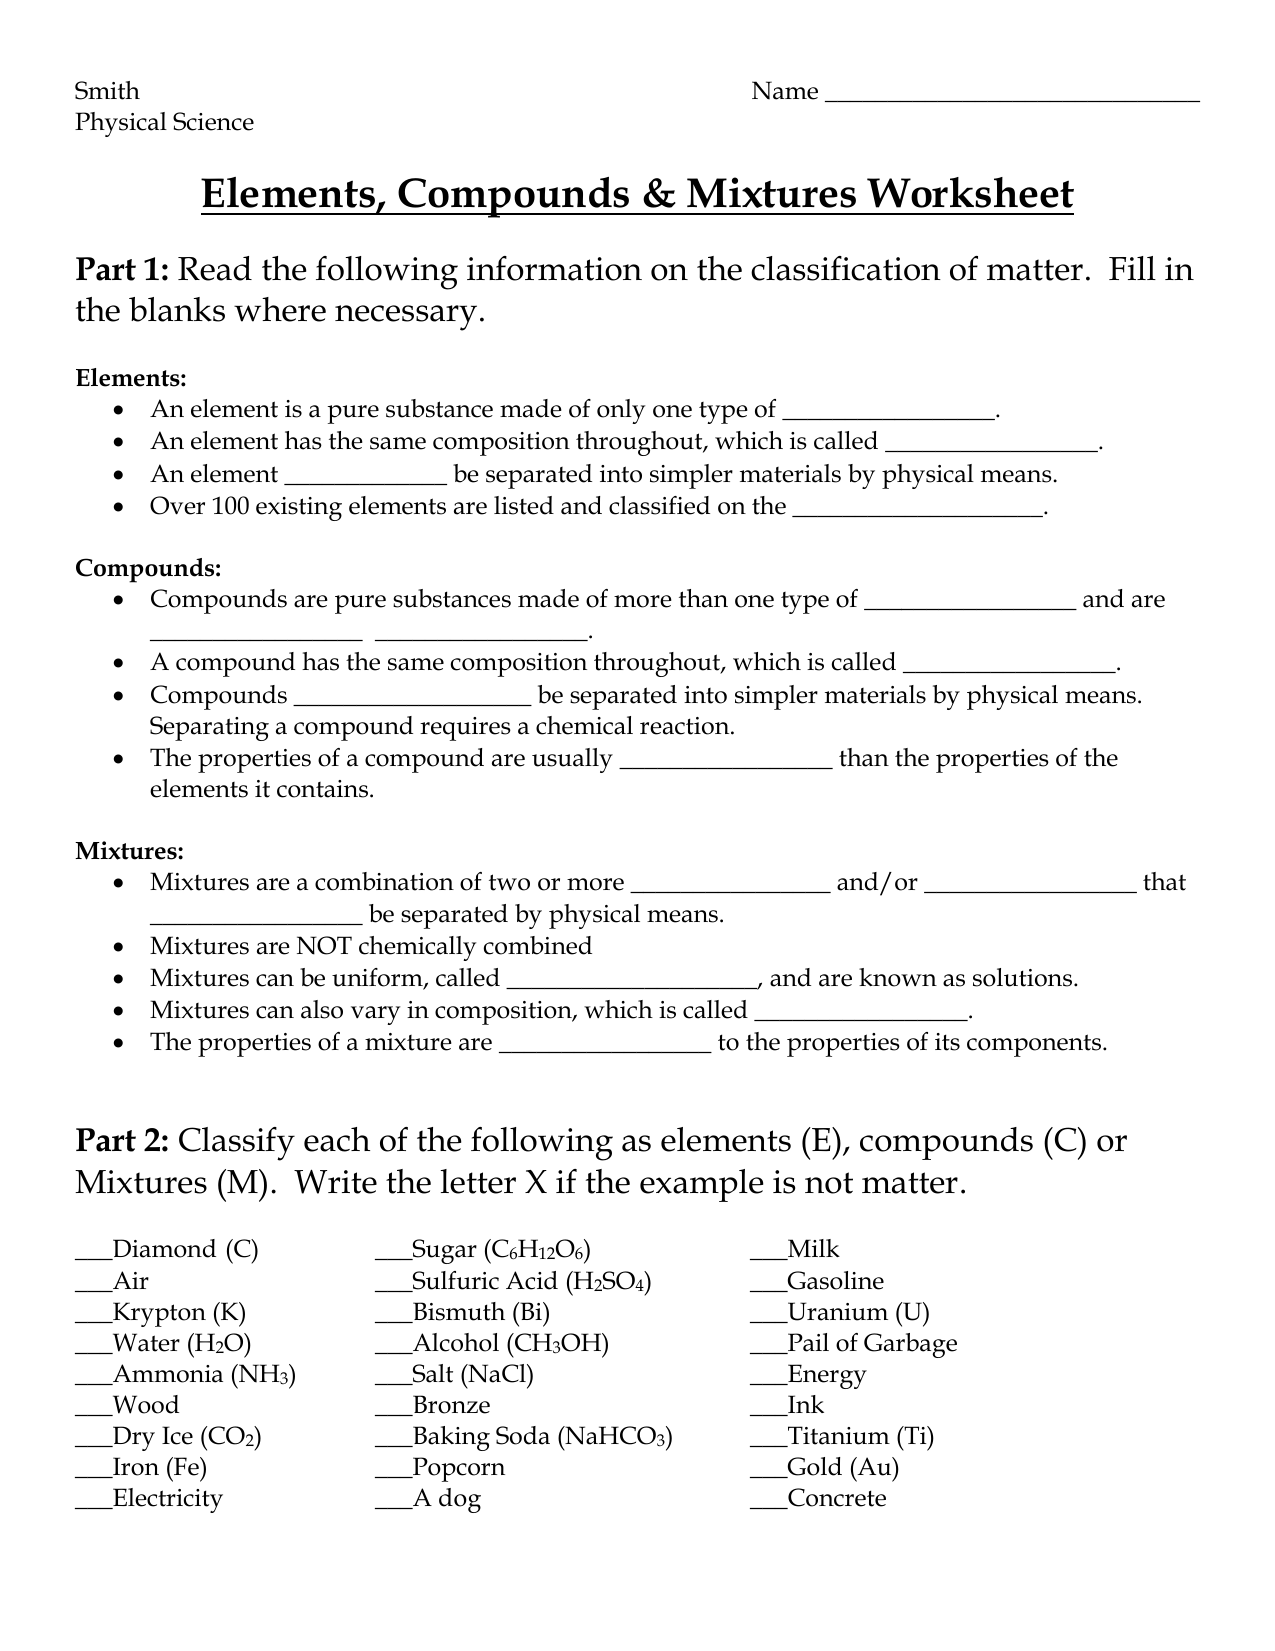 Elements, Compounds & Mixtures Worksheet Throughout Elements Compounds And Mixtures Worksheet